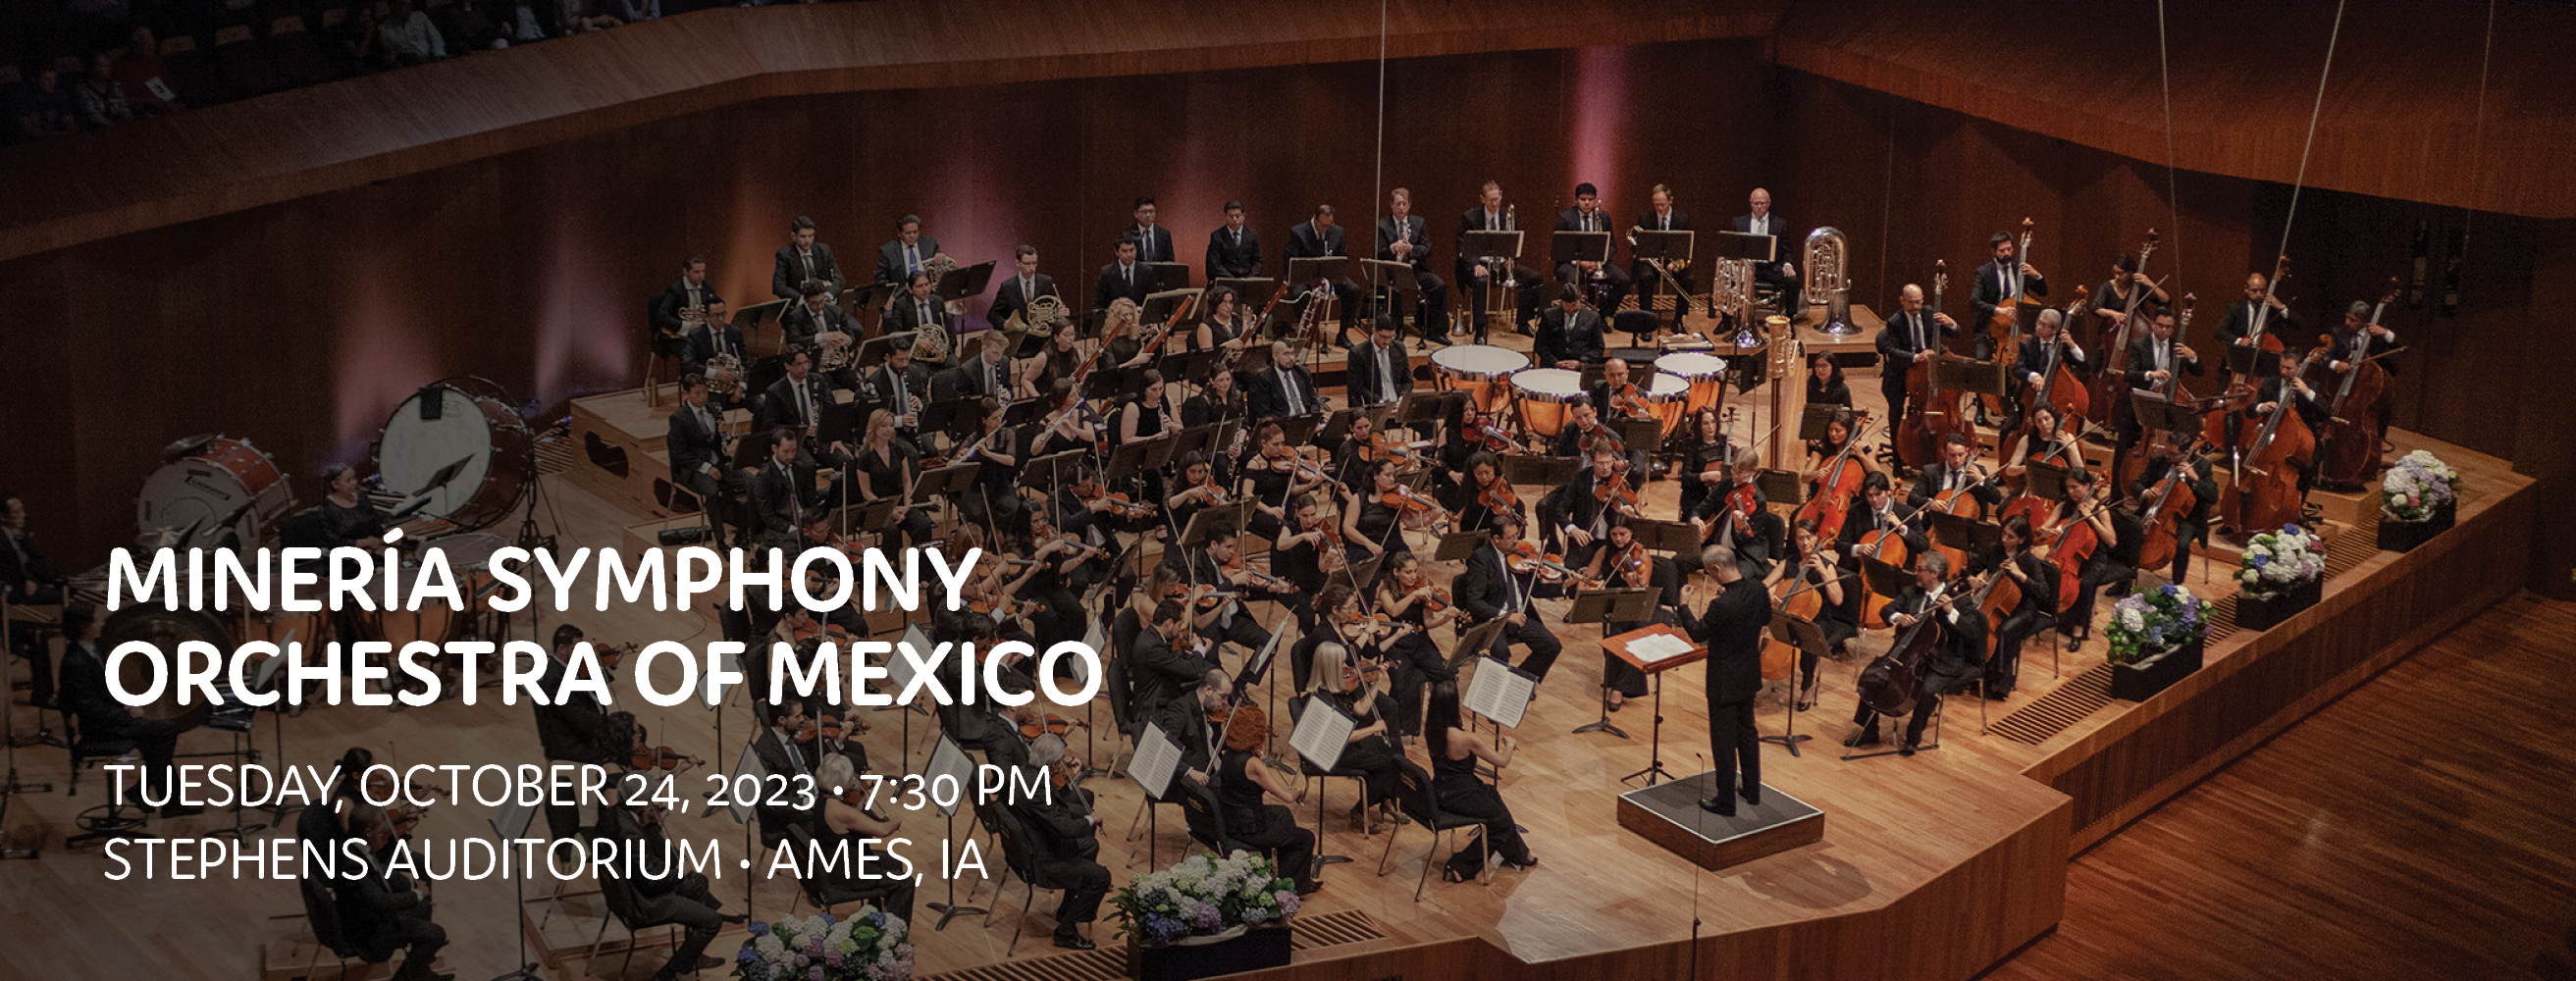 Mineria Symphony Orchestra of Mexico